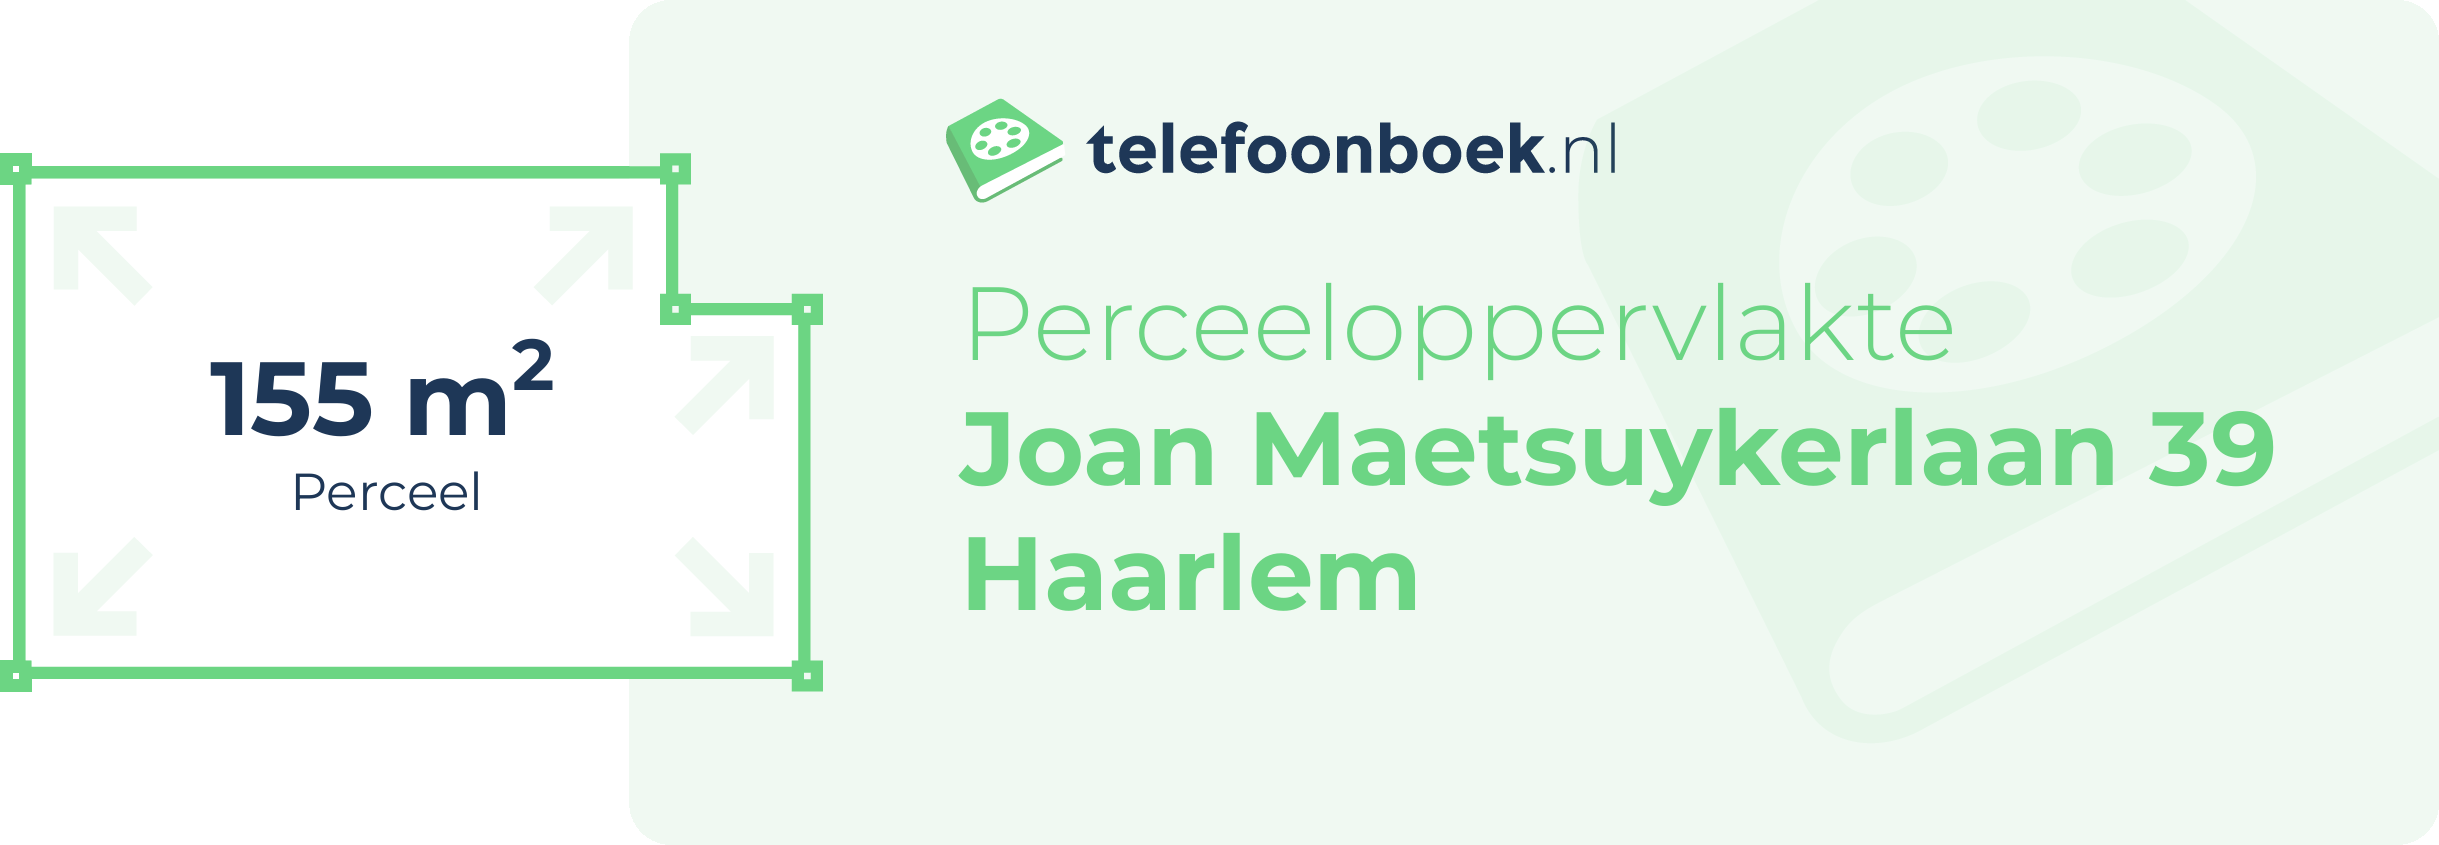 Perceeloppervlakte Joan Maetsuykerlaan 39 Haarlem